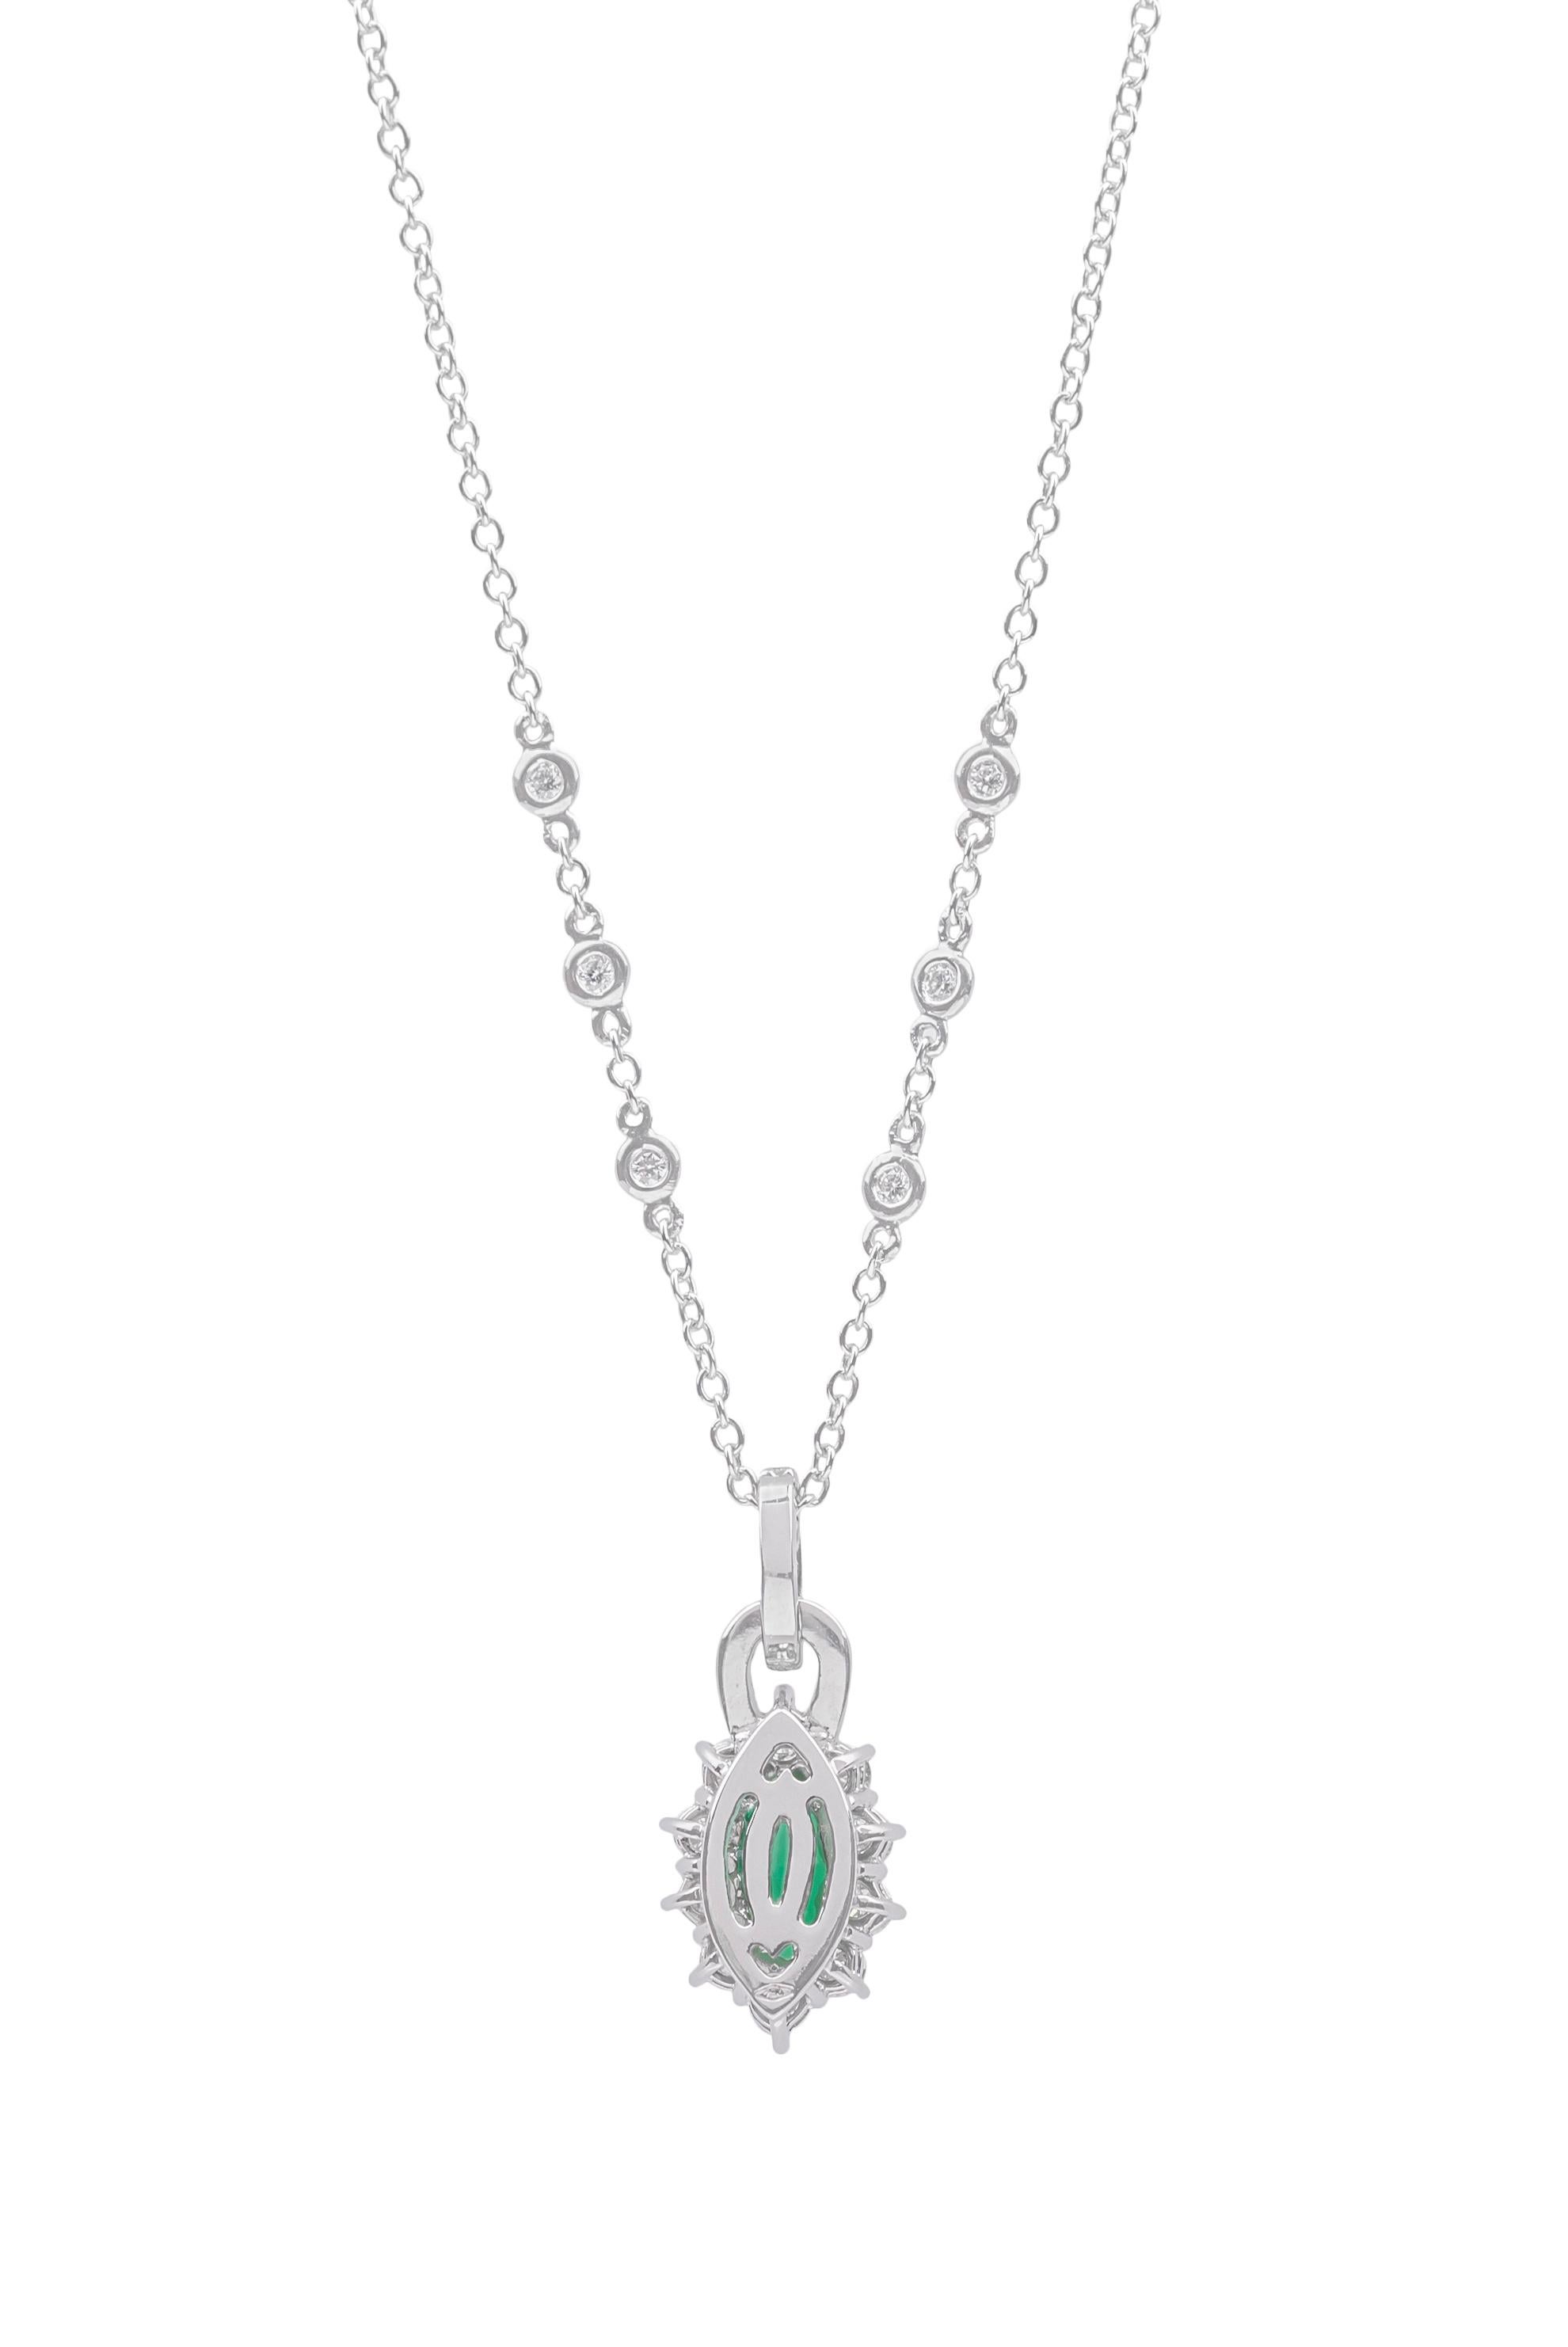 Contemporary 1.30ct Navette 'Marquise' Cut Emerand and Brilliant Cut Diamonds Necklace